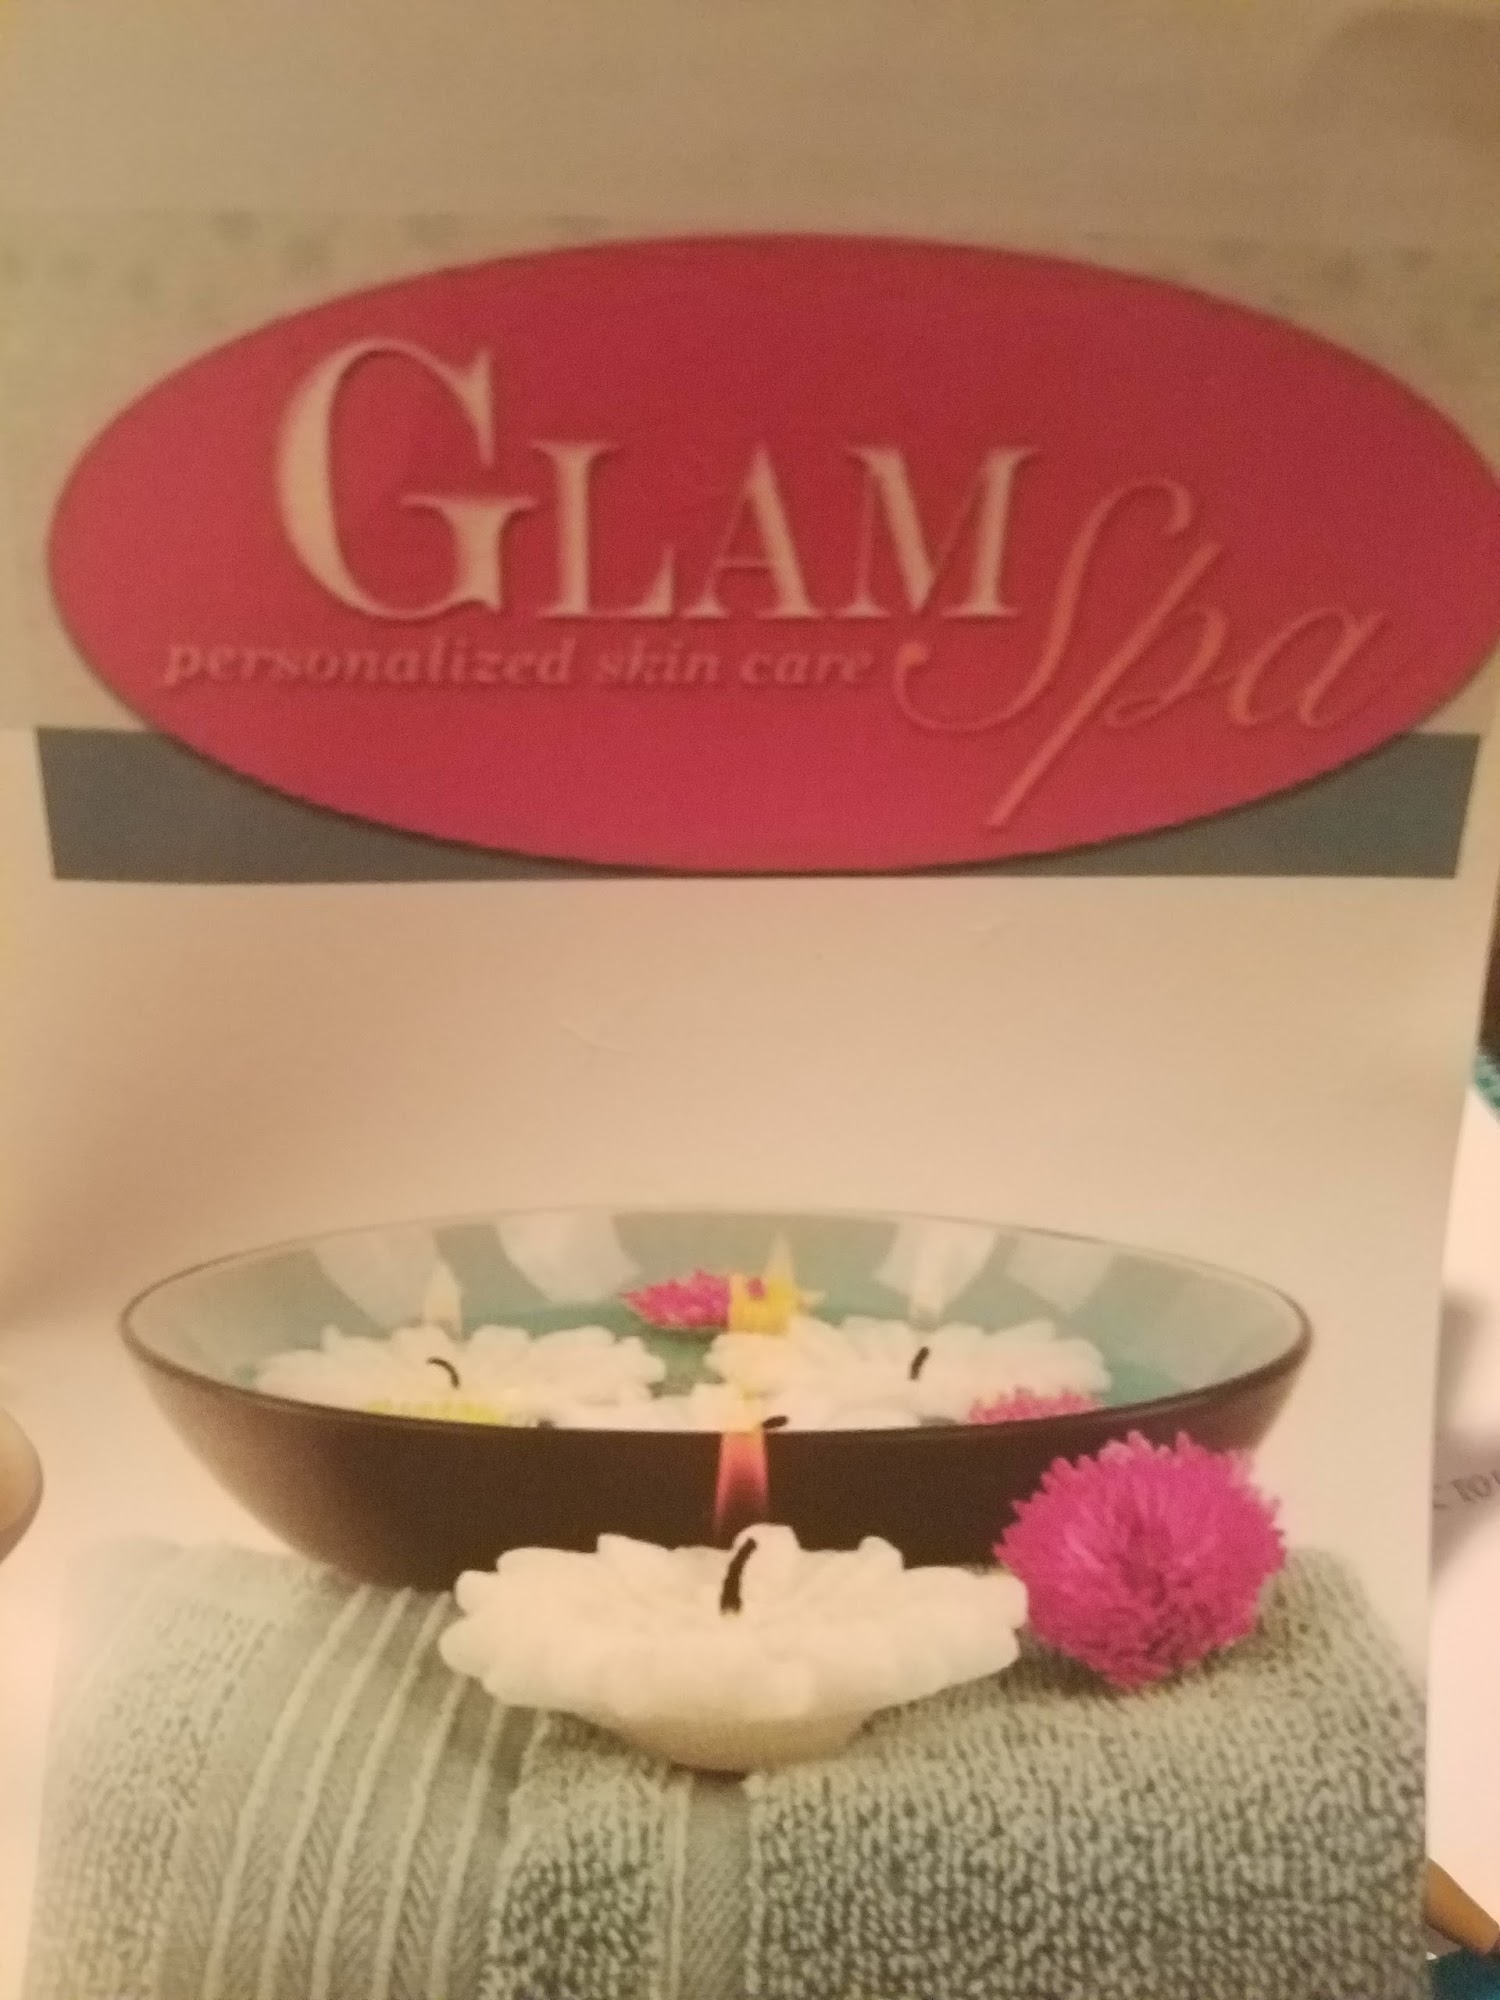 Glam Spa